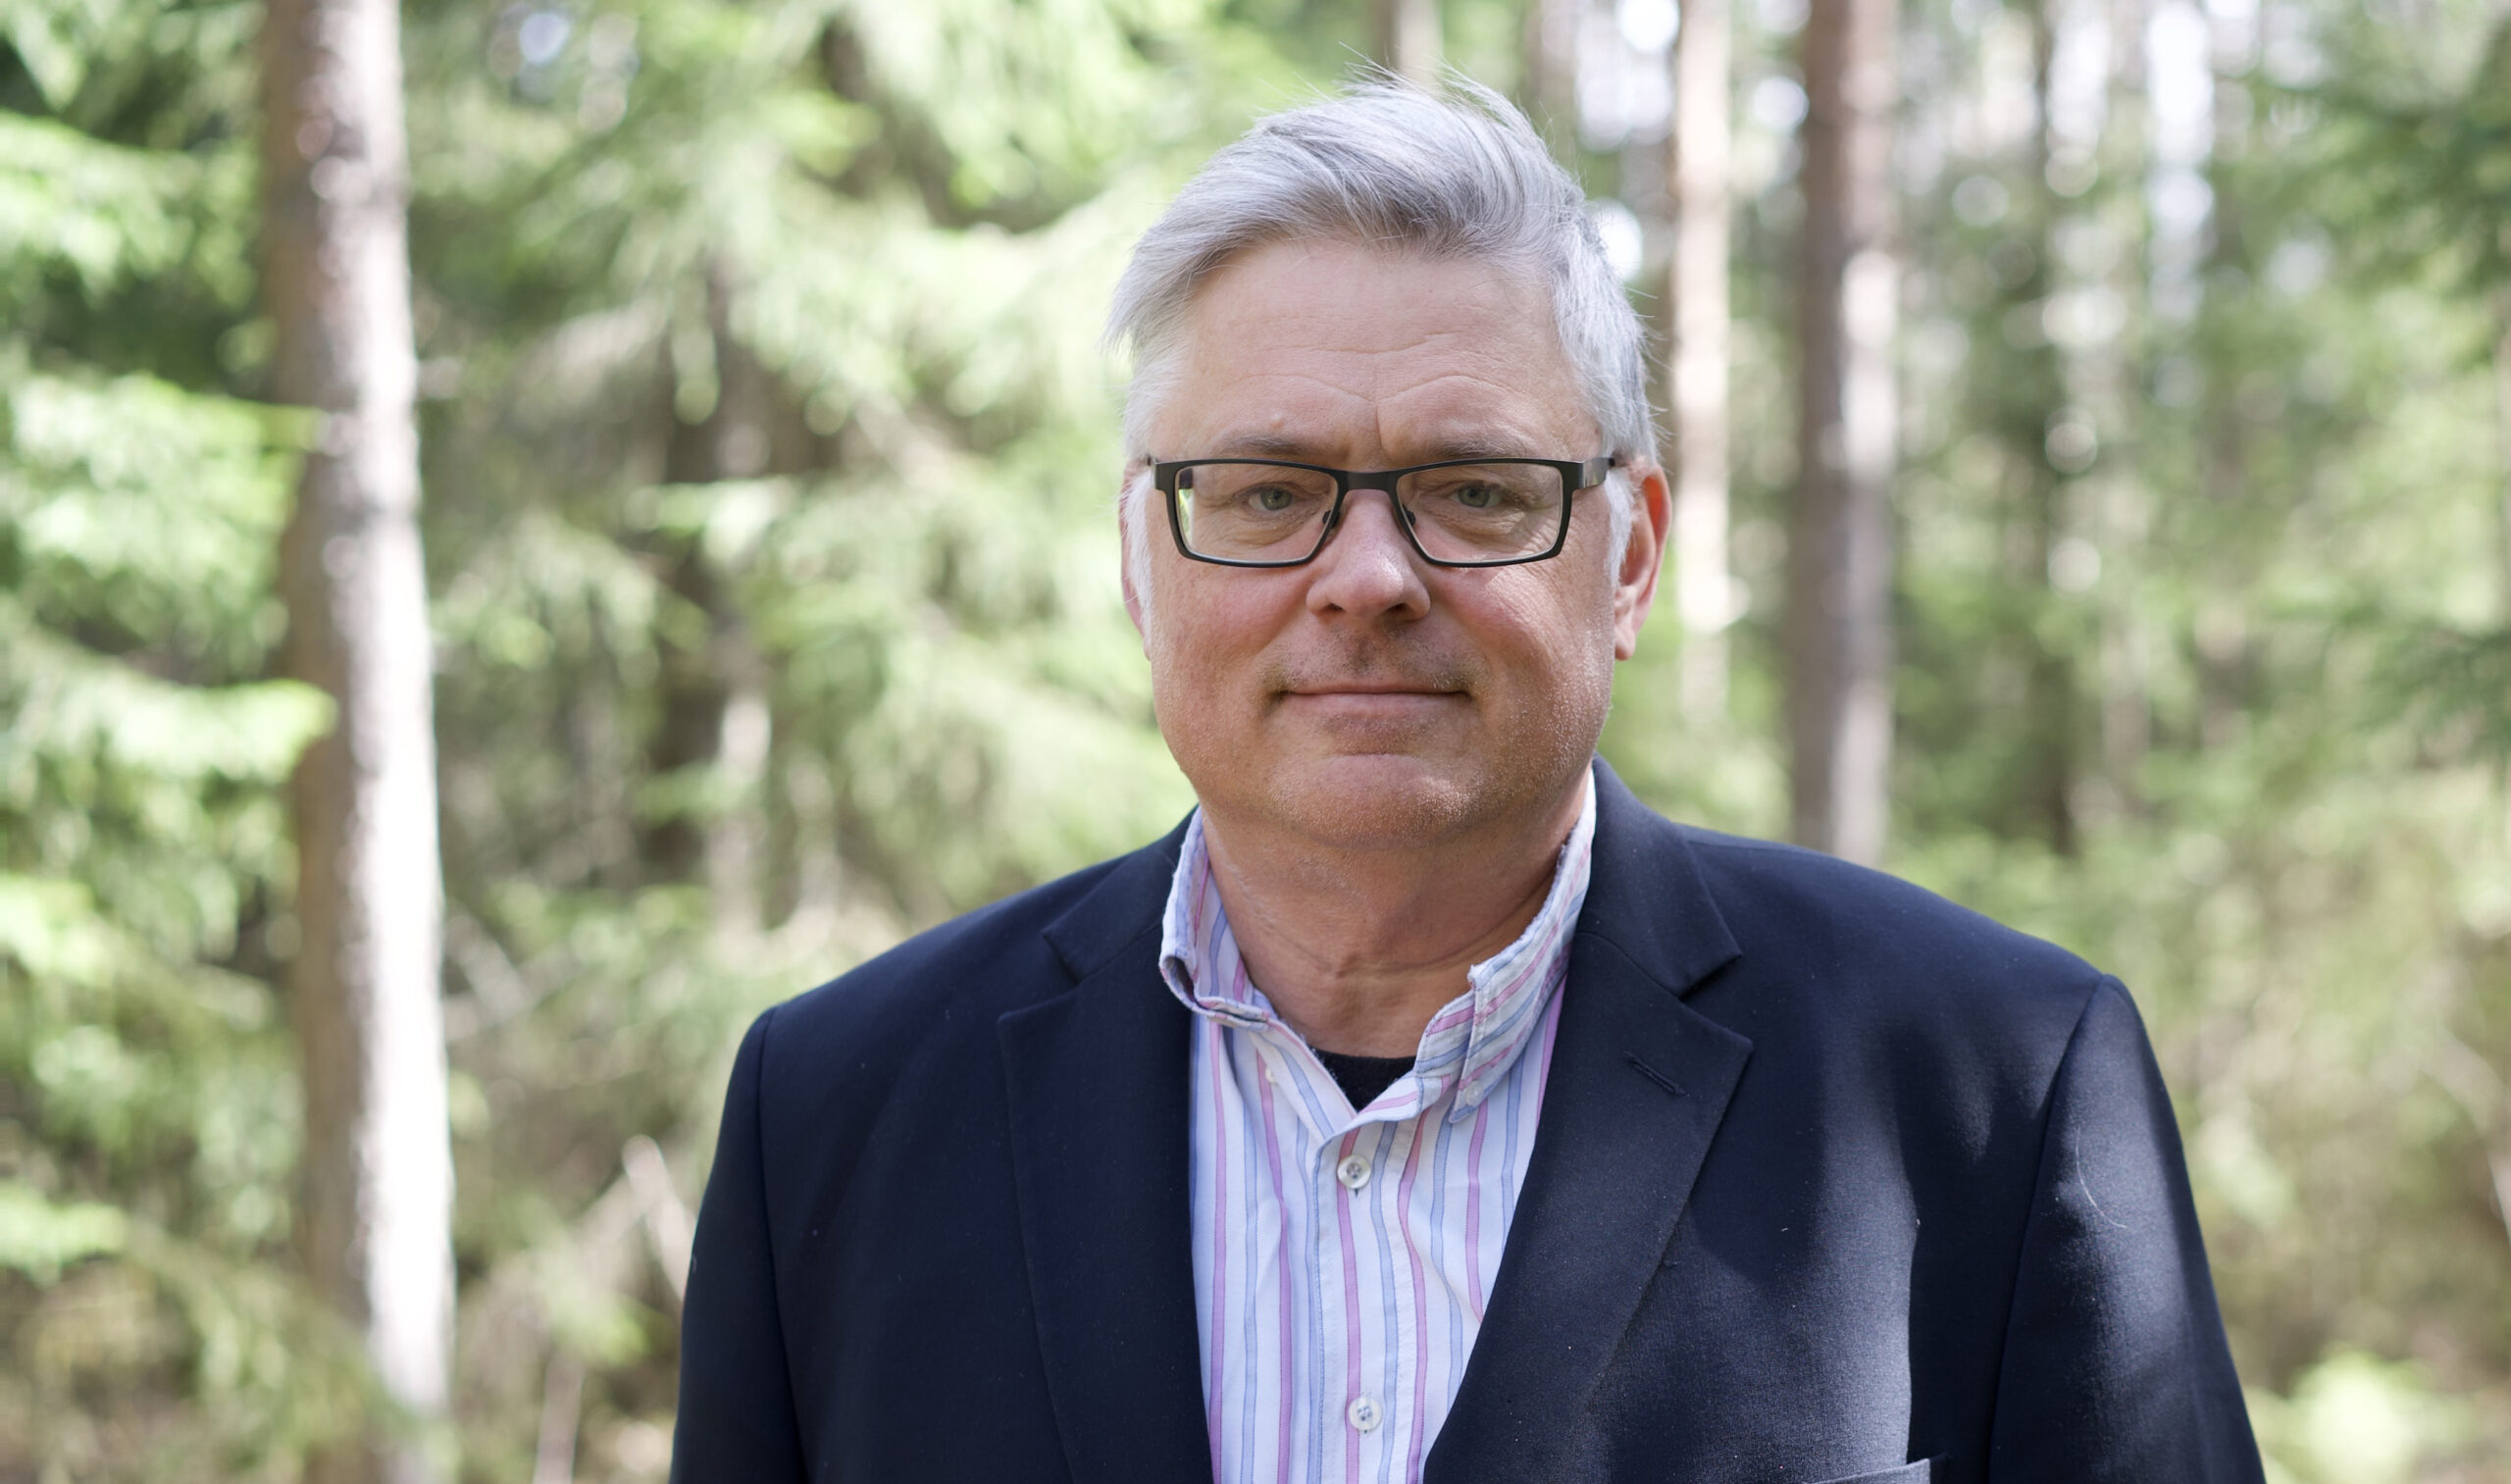 Bengt Kriström, Professor of Resource Economics at the Swedish University of Agricultural Sciences (SLU).